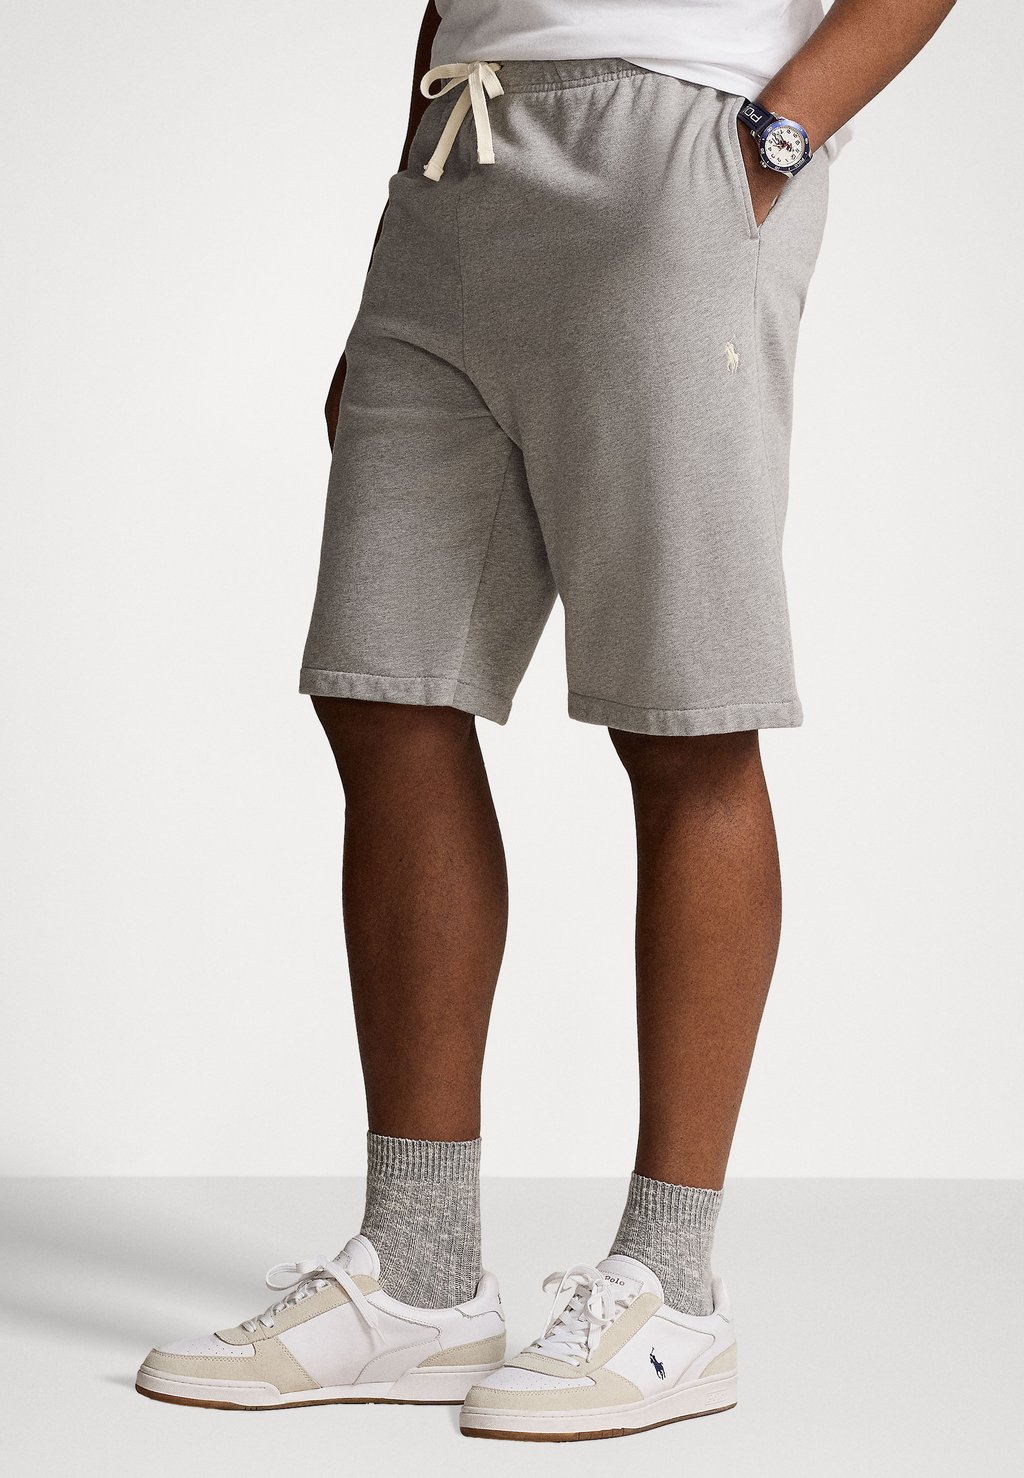 Спортивные брюки ATHLETIC Polo Ralph Lauren Big & Tall, серый джоггеры polo ralph lauren серый